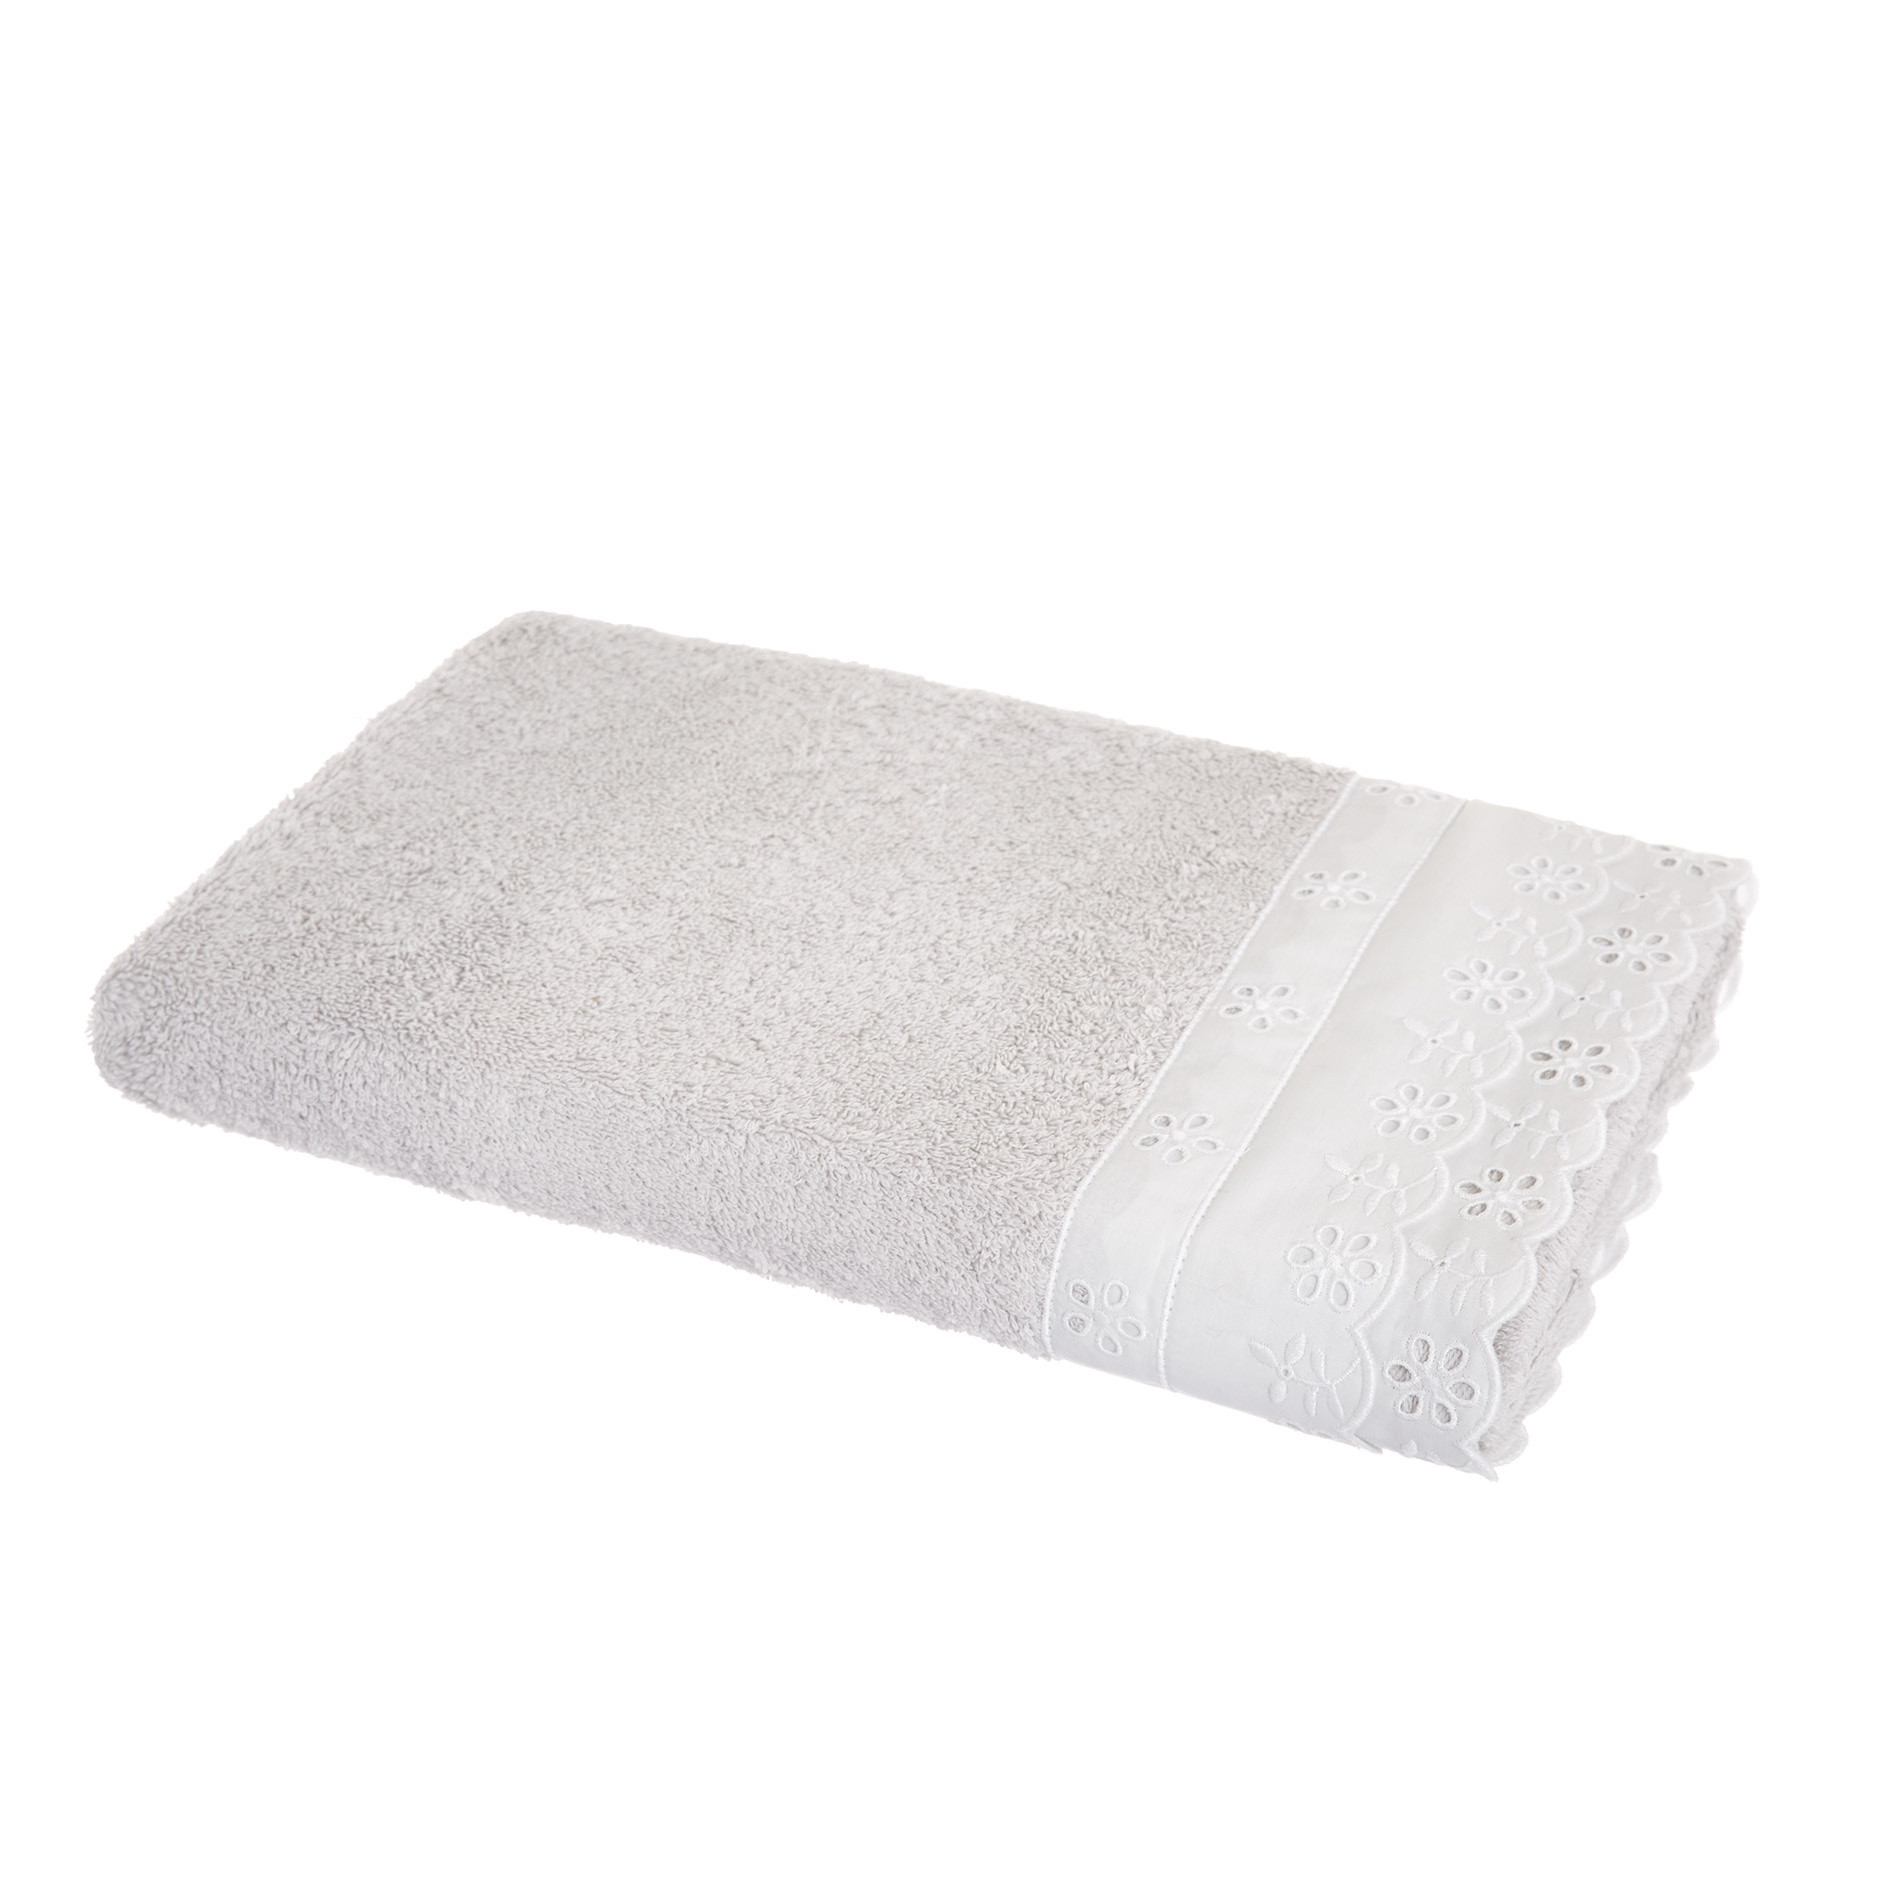 Portofino broderie towel, Light Grey, large image number 1